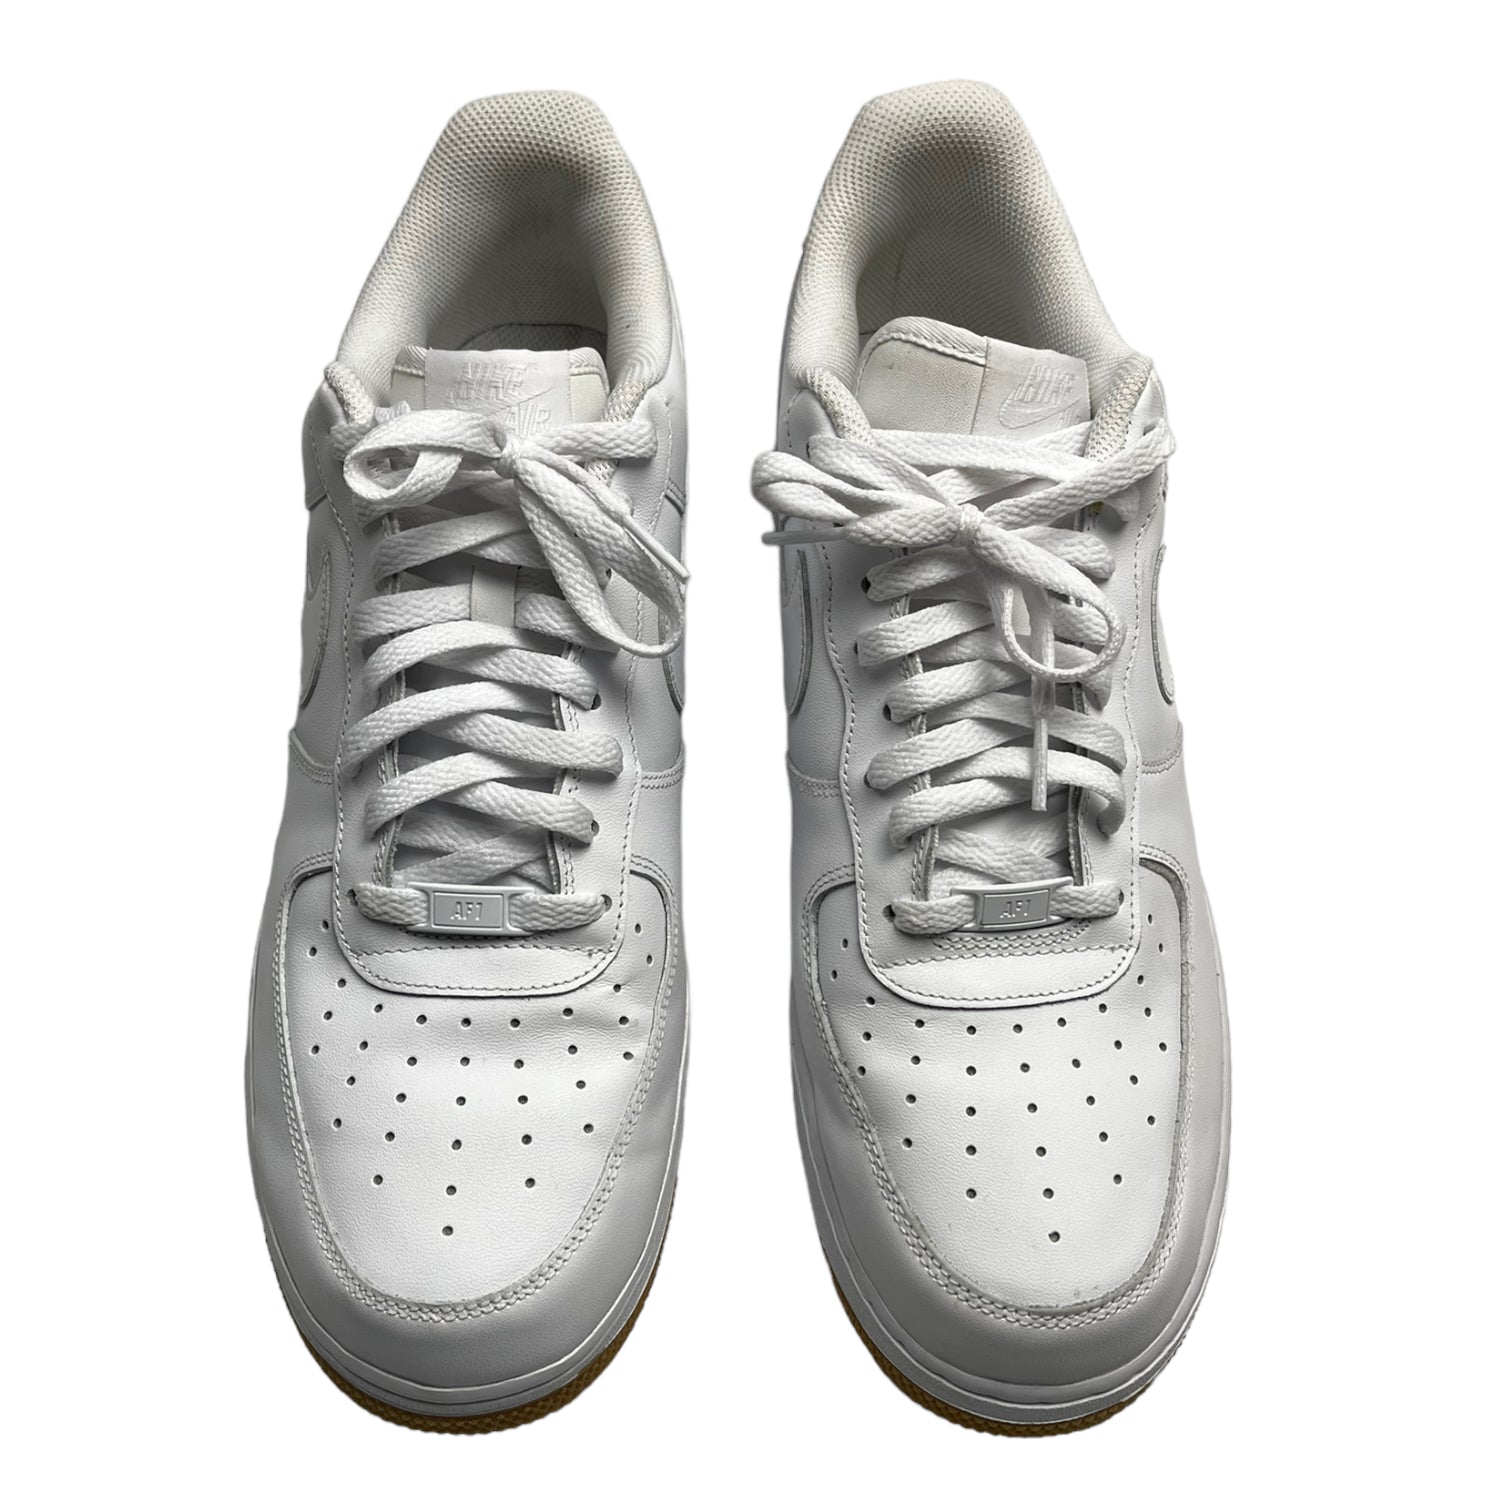 Nike Air Force 1 White Gum (Used)